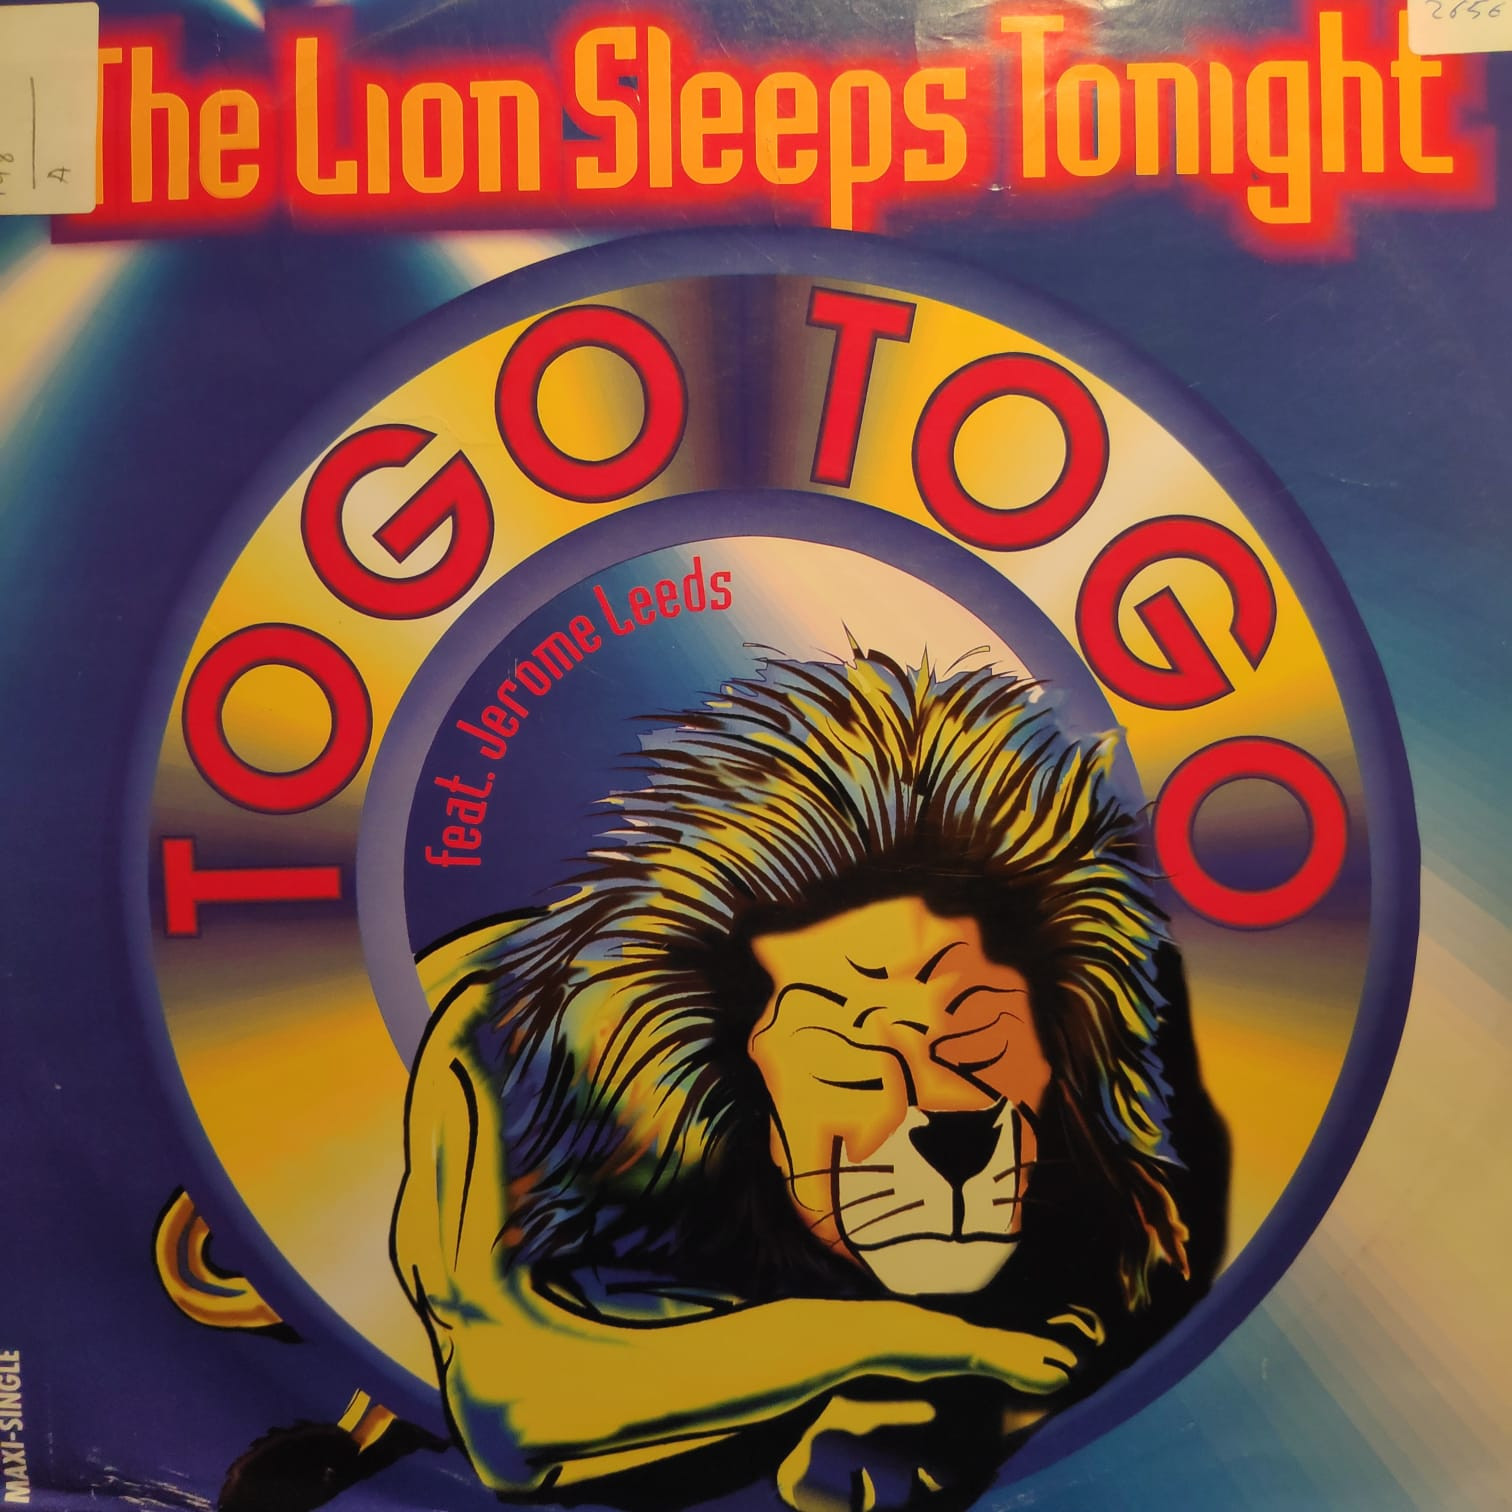 (A1215) Togo Togo Feat. Jerome Leeds ‎– The Lion Sleeps Tonight